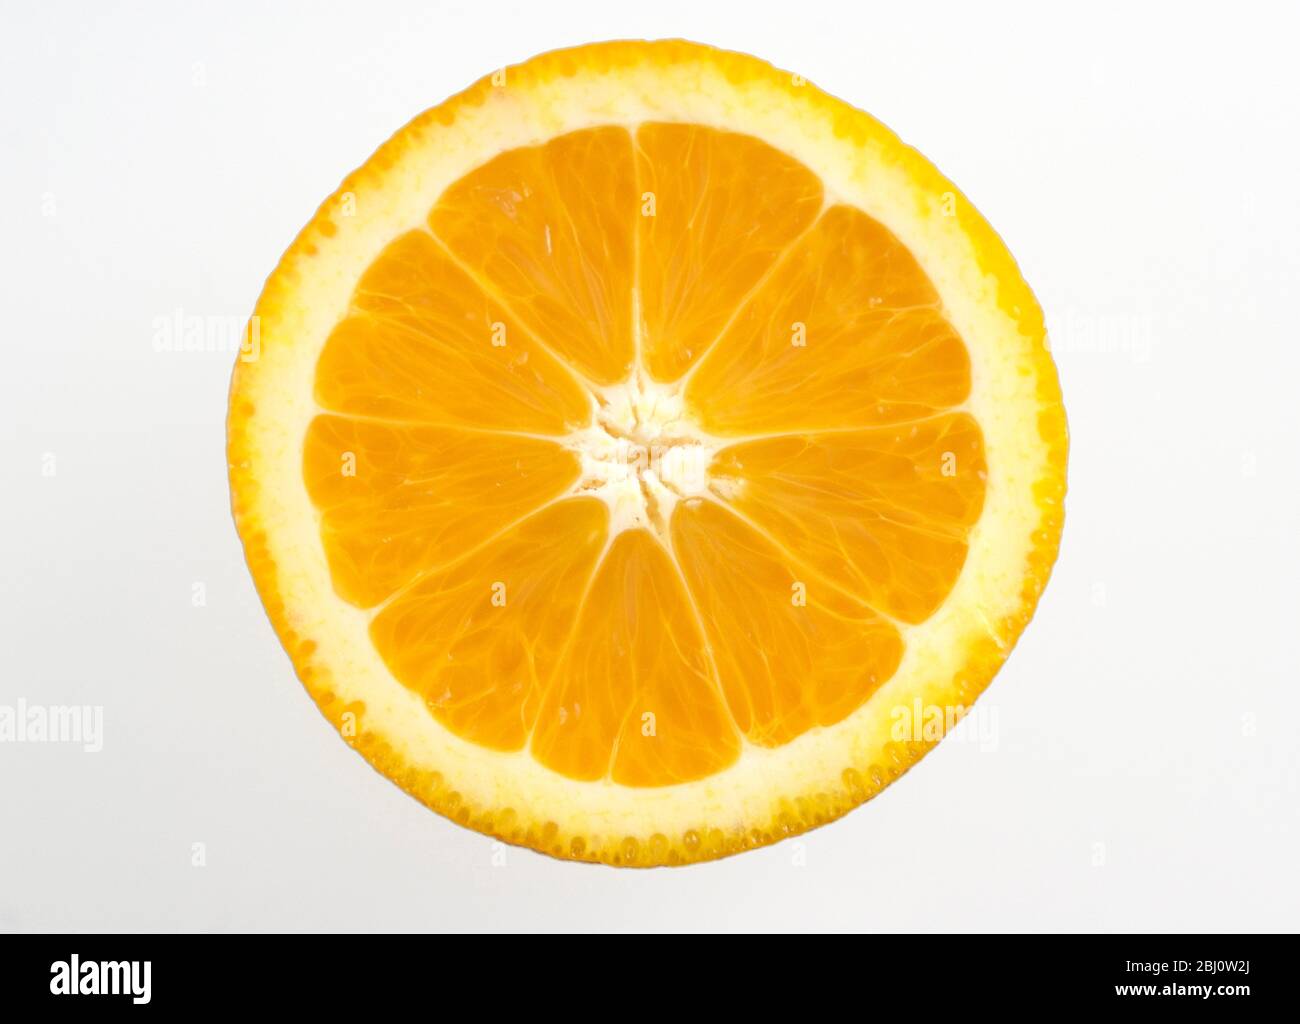 Cut face of half orange against white background - Stock Photo